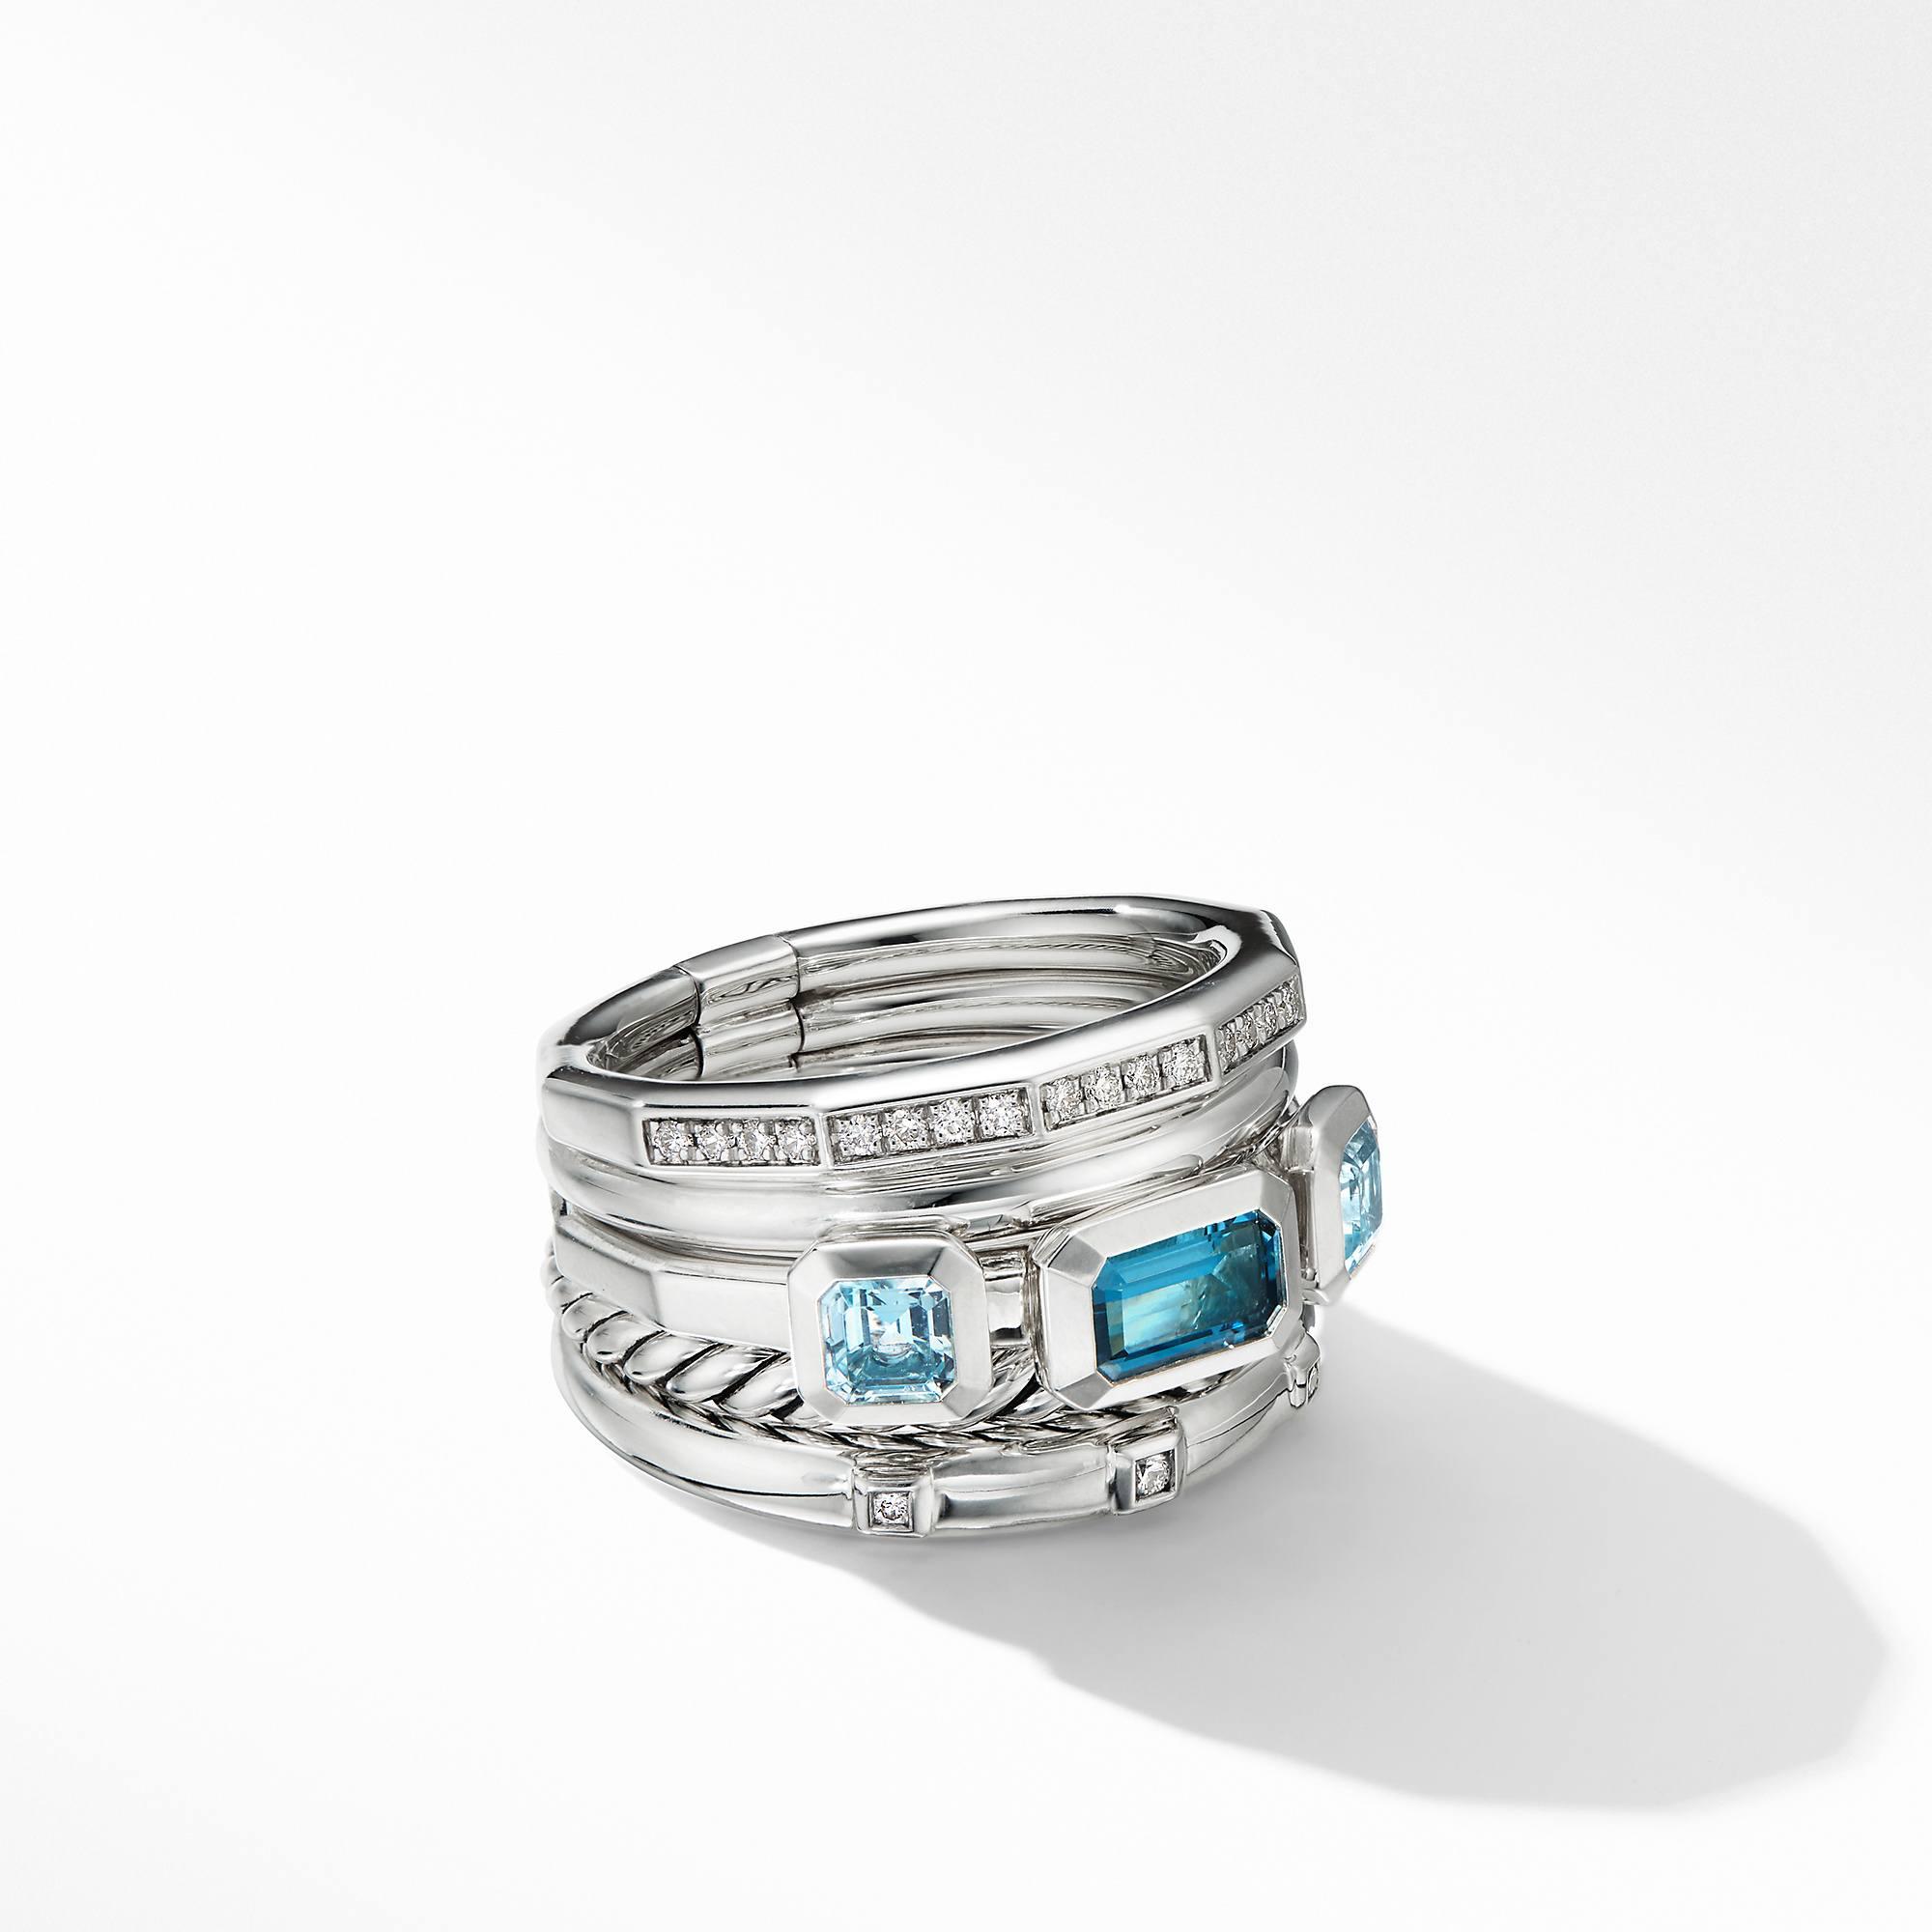 David Yurman Stax Wide Ring with Hampton Blue Topaz and Diamonds, size 7